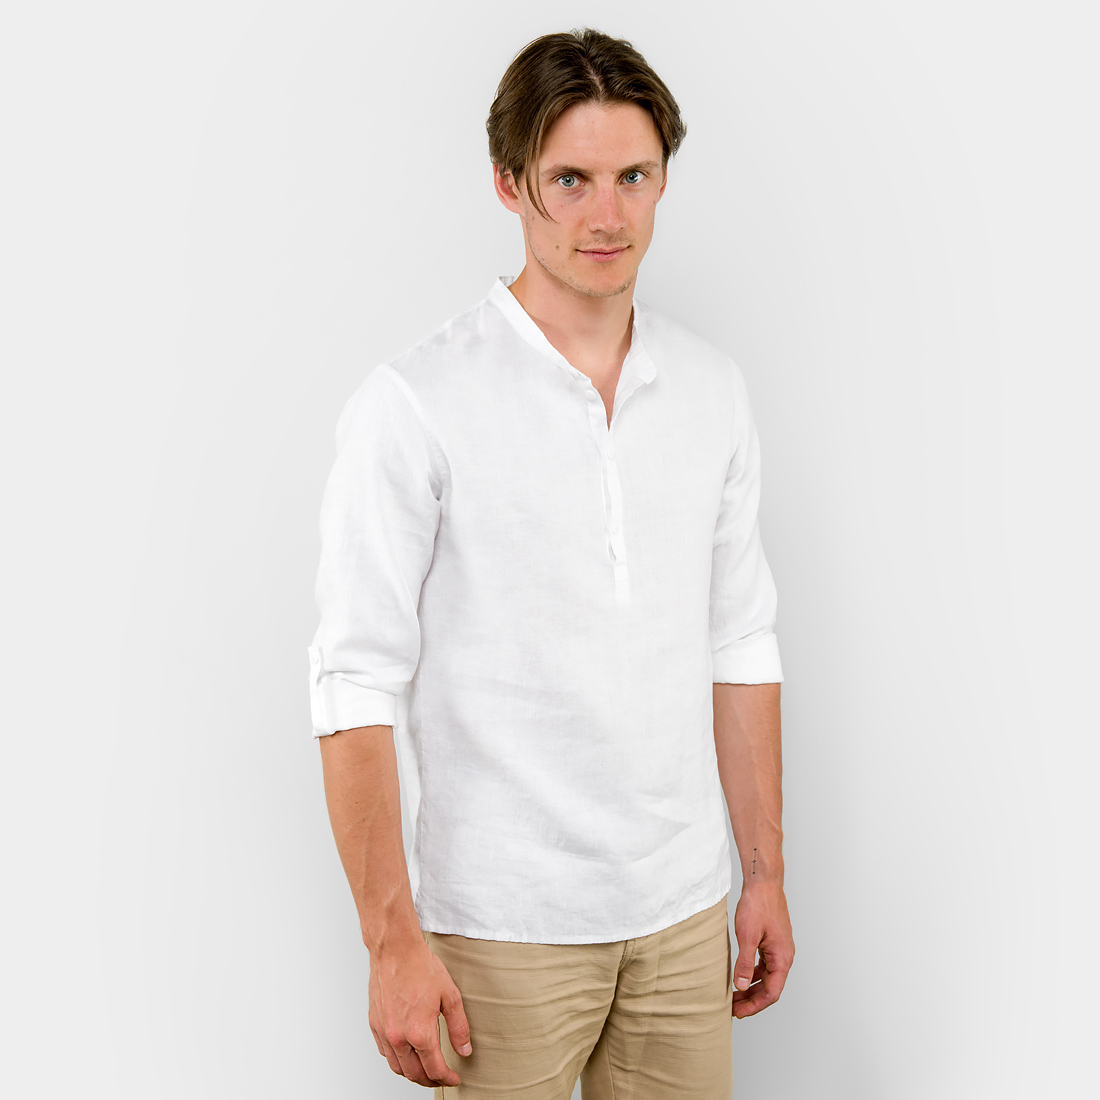 Linen white shirt for men. Manufacturer: AB “Siulas”